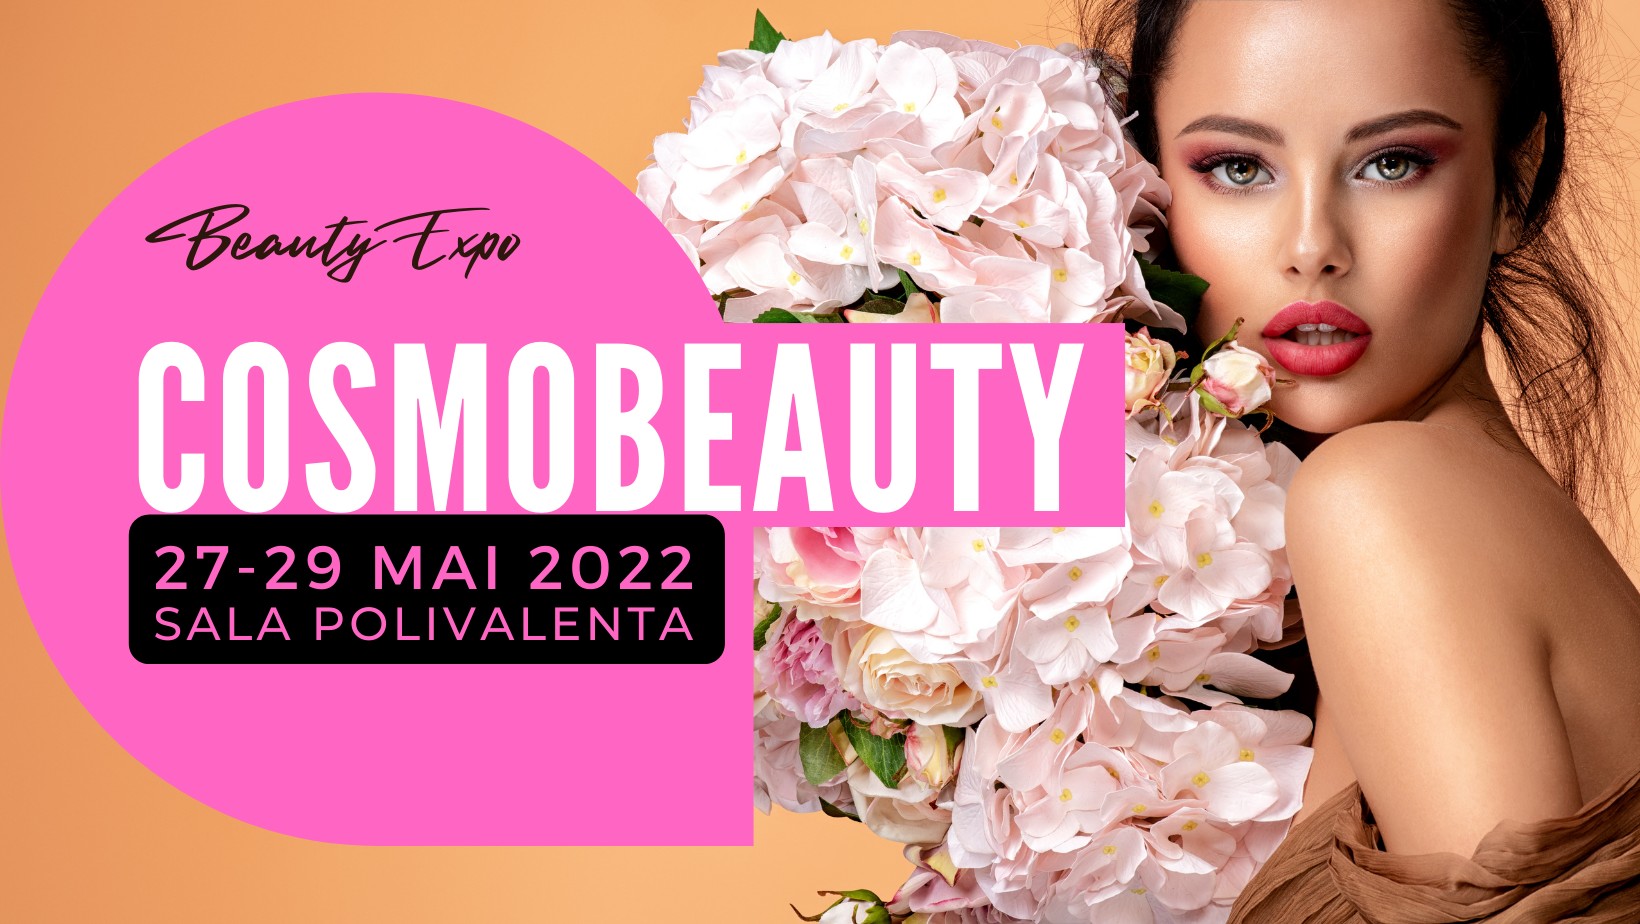 Cosmobeauty EXPO 2022 - 27-29 mai 2022, Sala Polivalentă